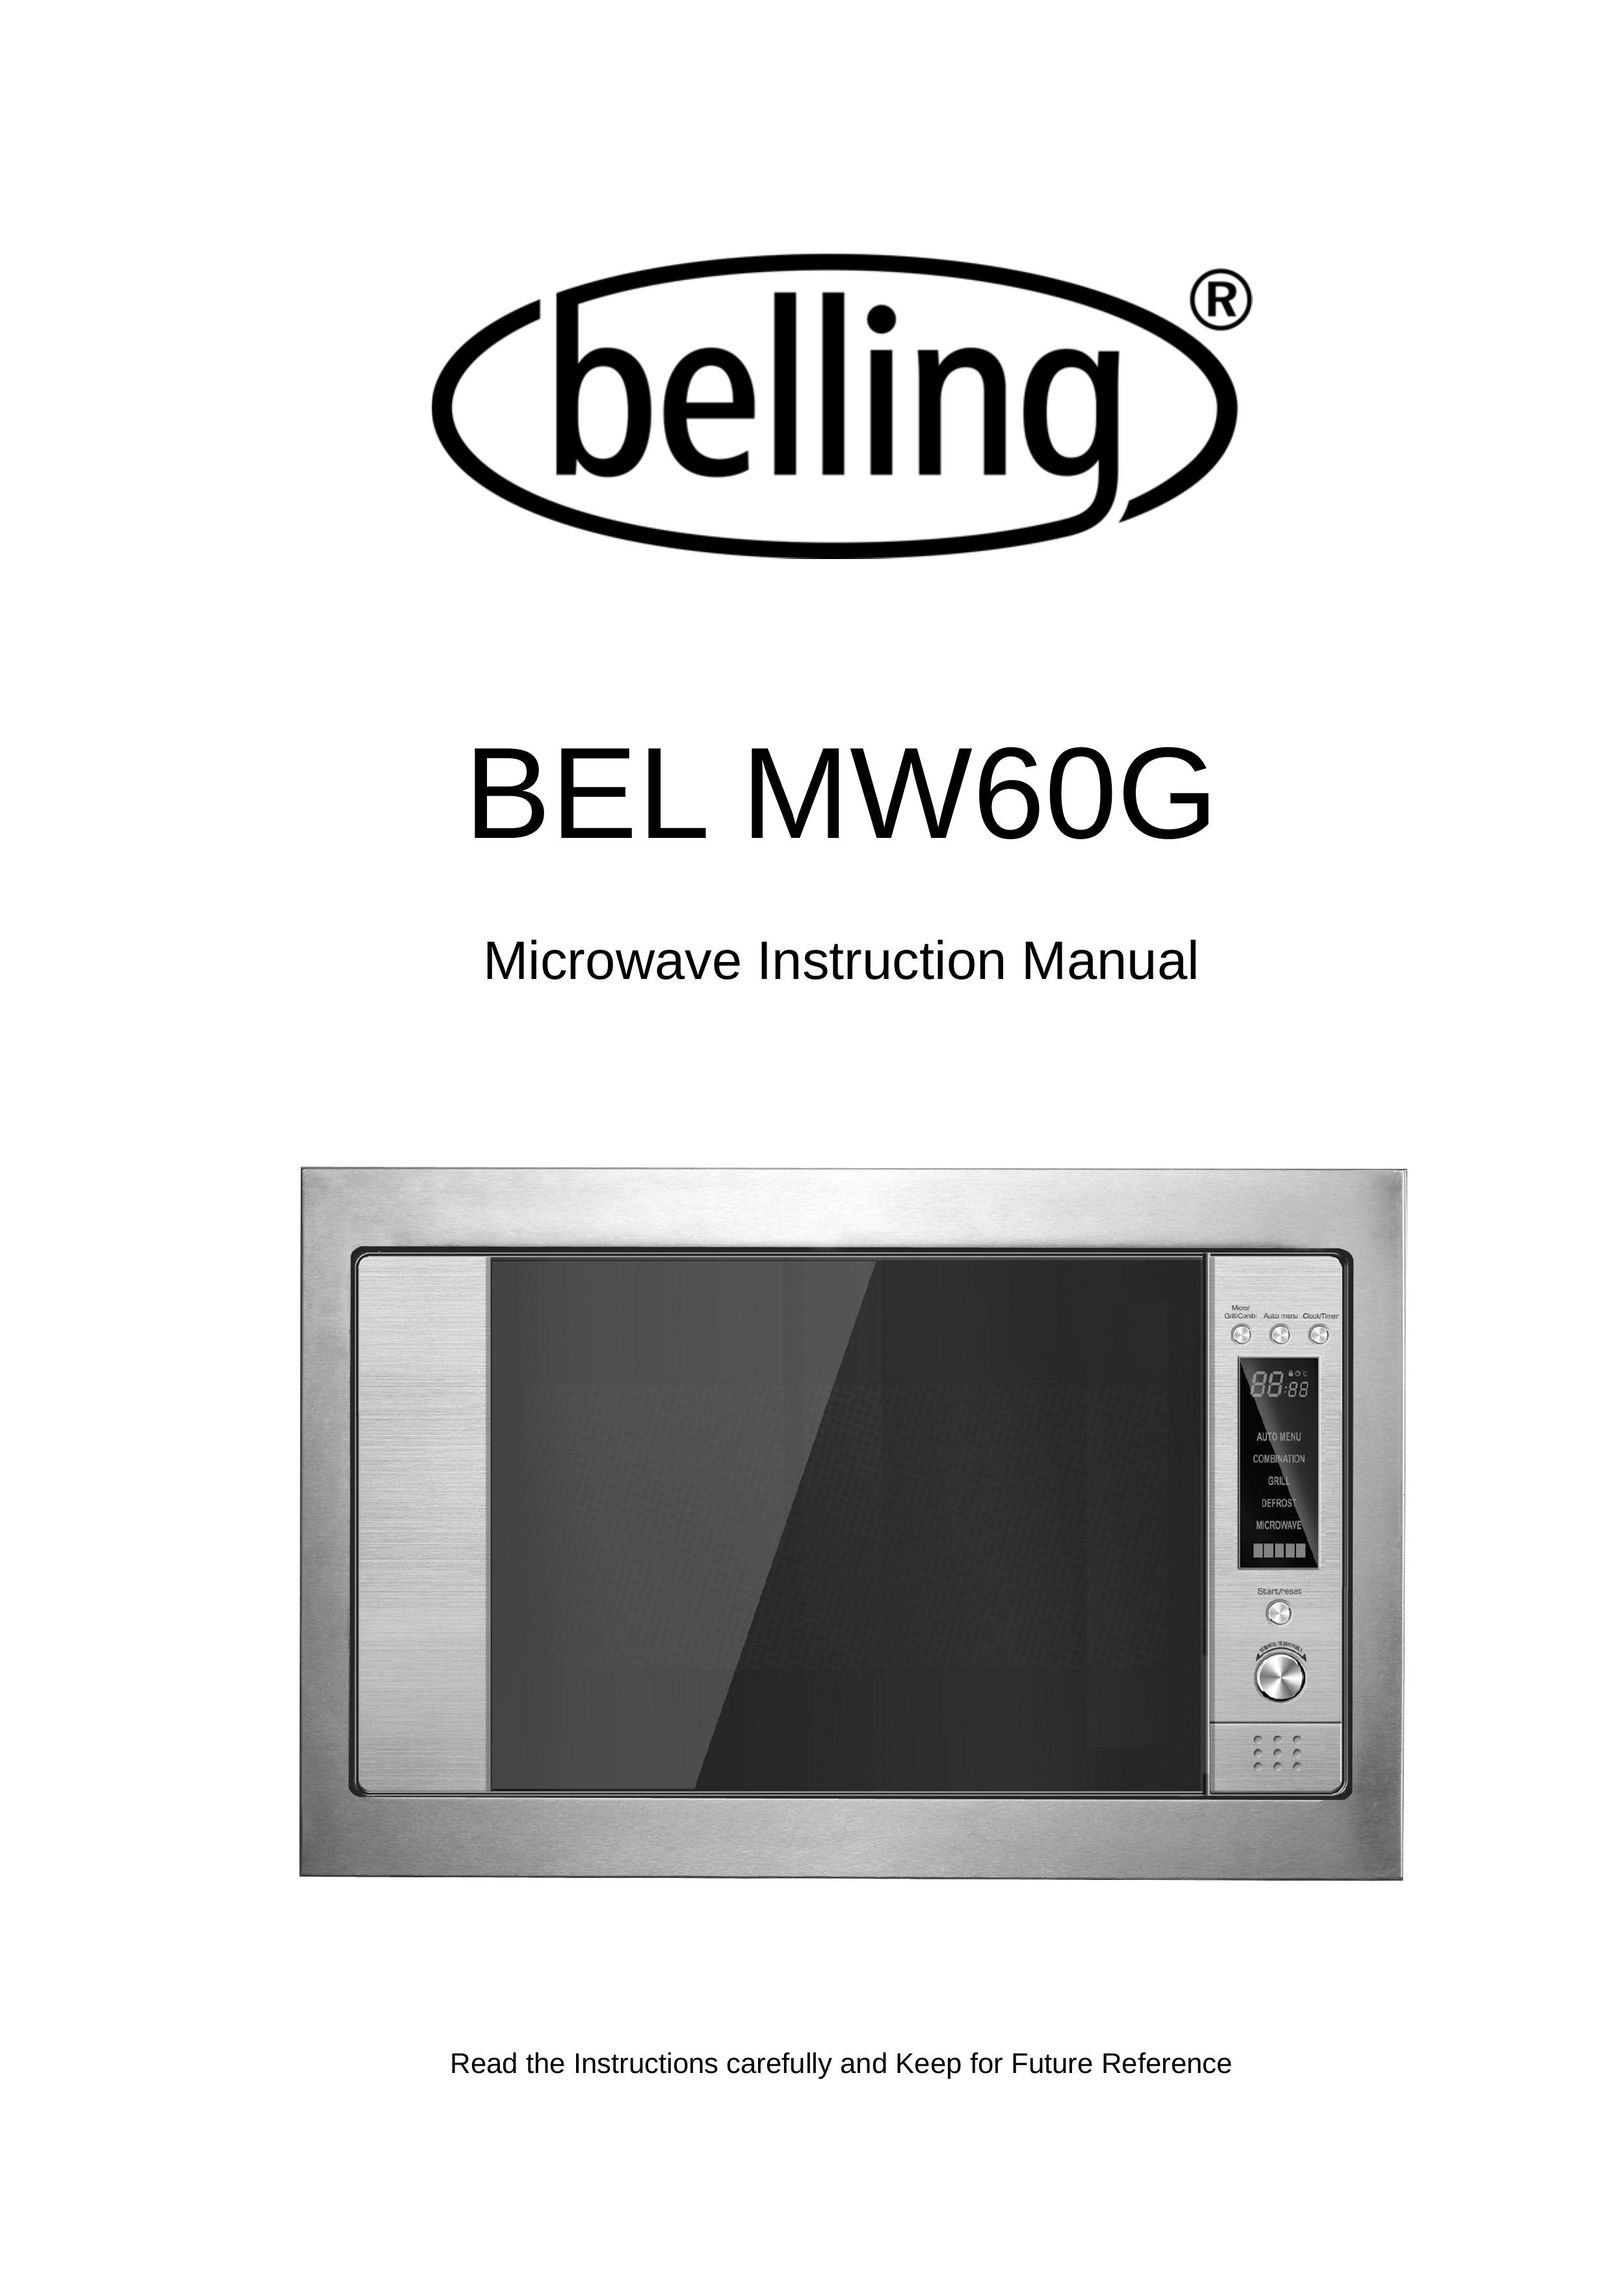 Glen Dimplex Home Appliances Ltd BEL MW60G Microwave Oven User Manual